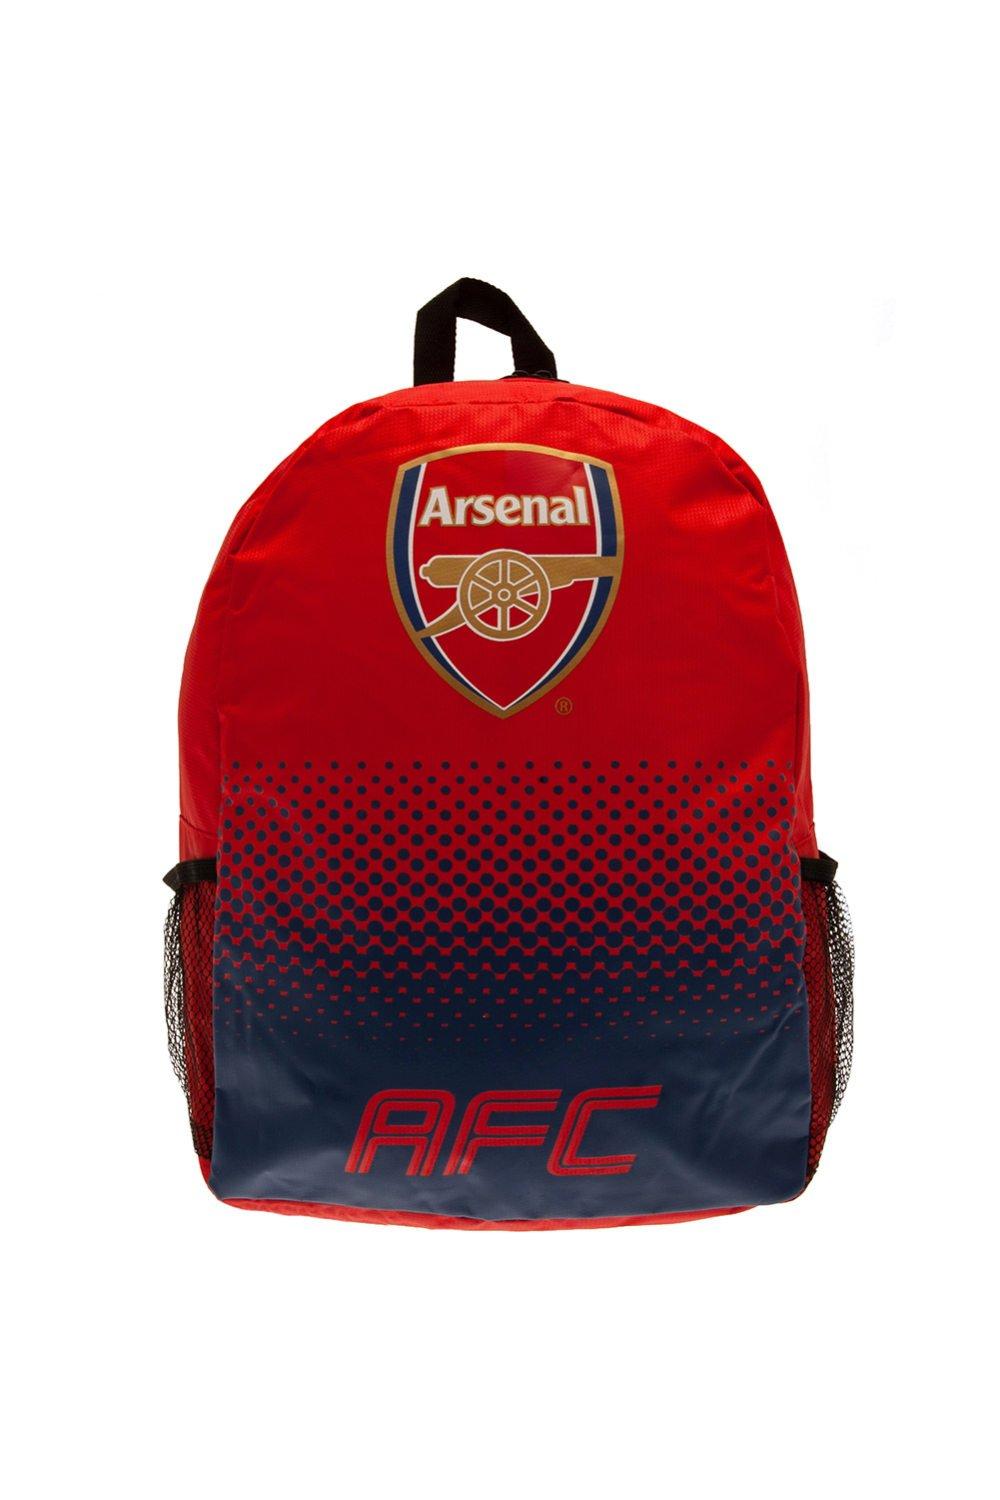 Рюкзак с гербом Arsenal FC, красный футбольная форма фк арсенал fc arsenal взрослая б н красно белая м красный белый 48